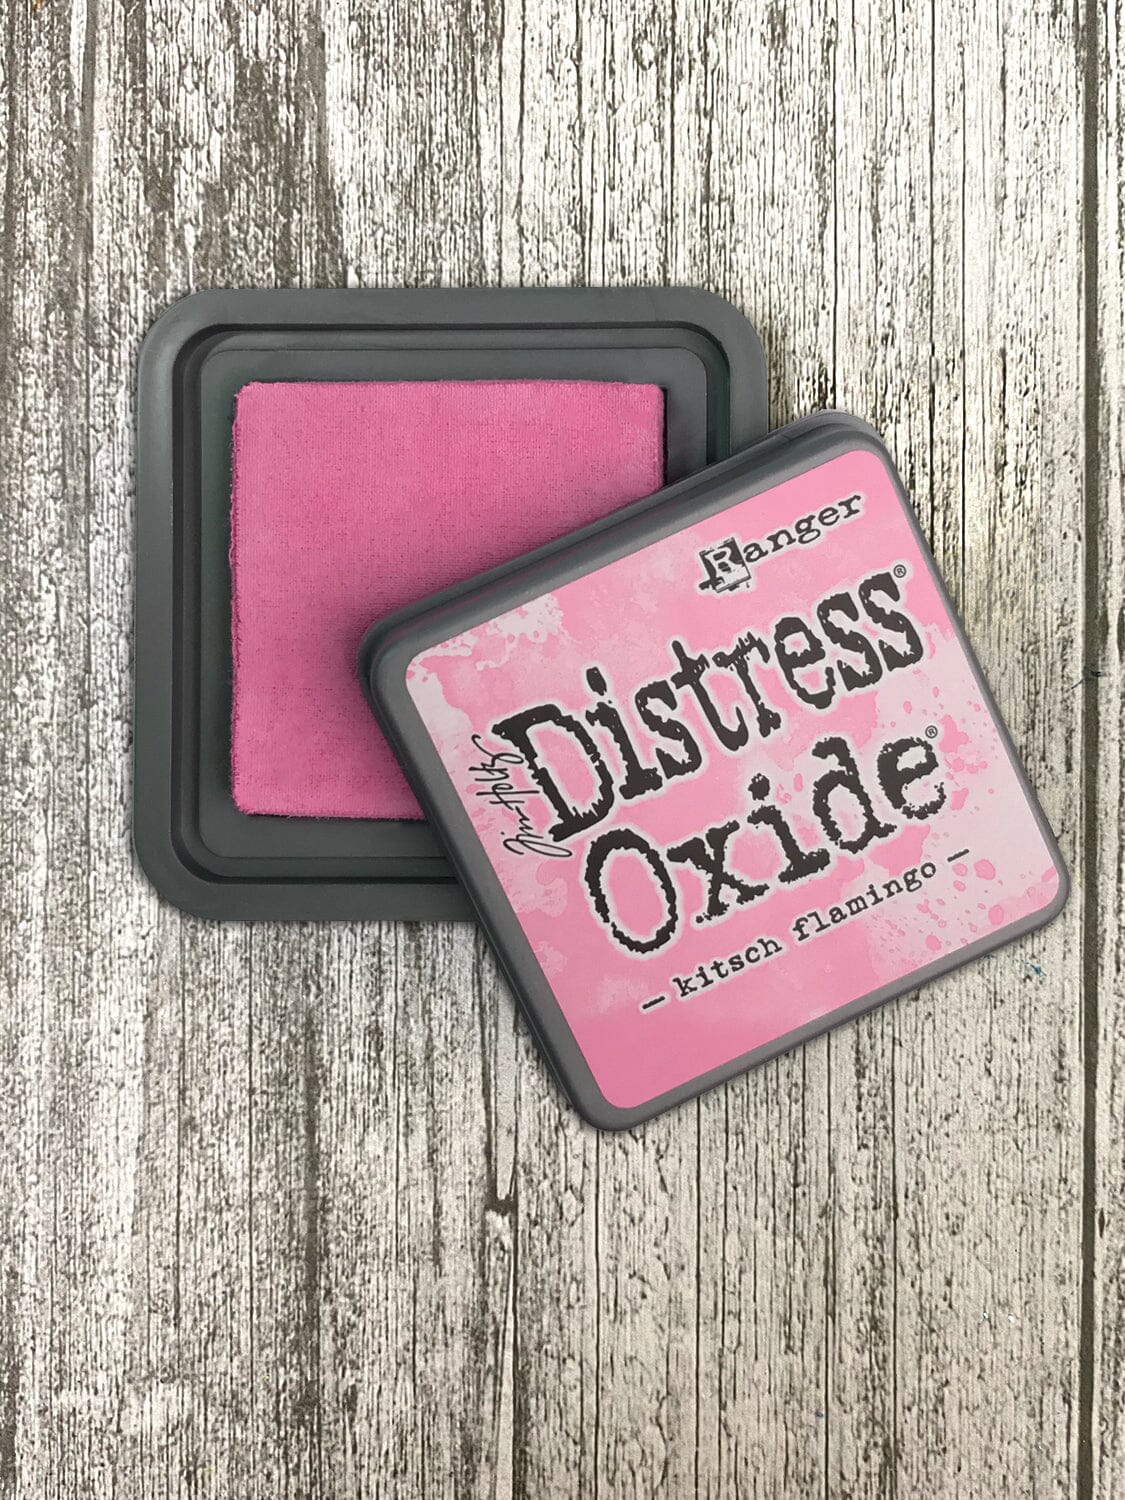 Tim Holtz Distress® Oxide® Ink Pad Kitsch Flamingo Ink Pad Distress 